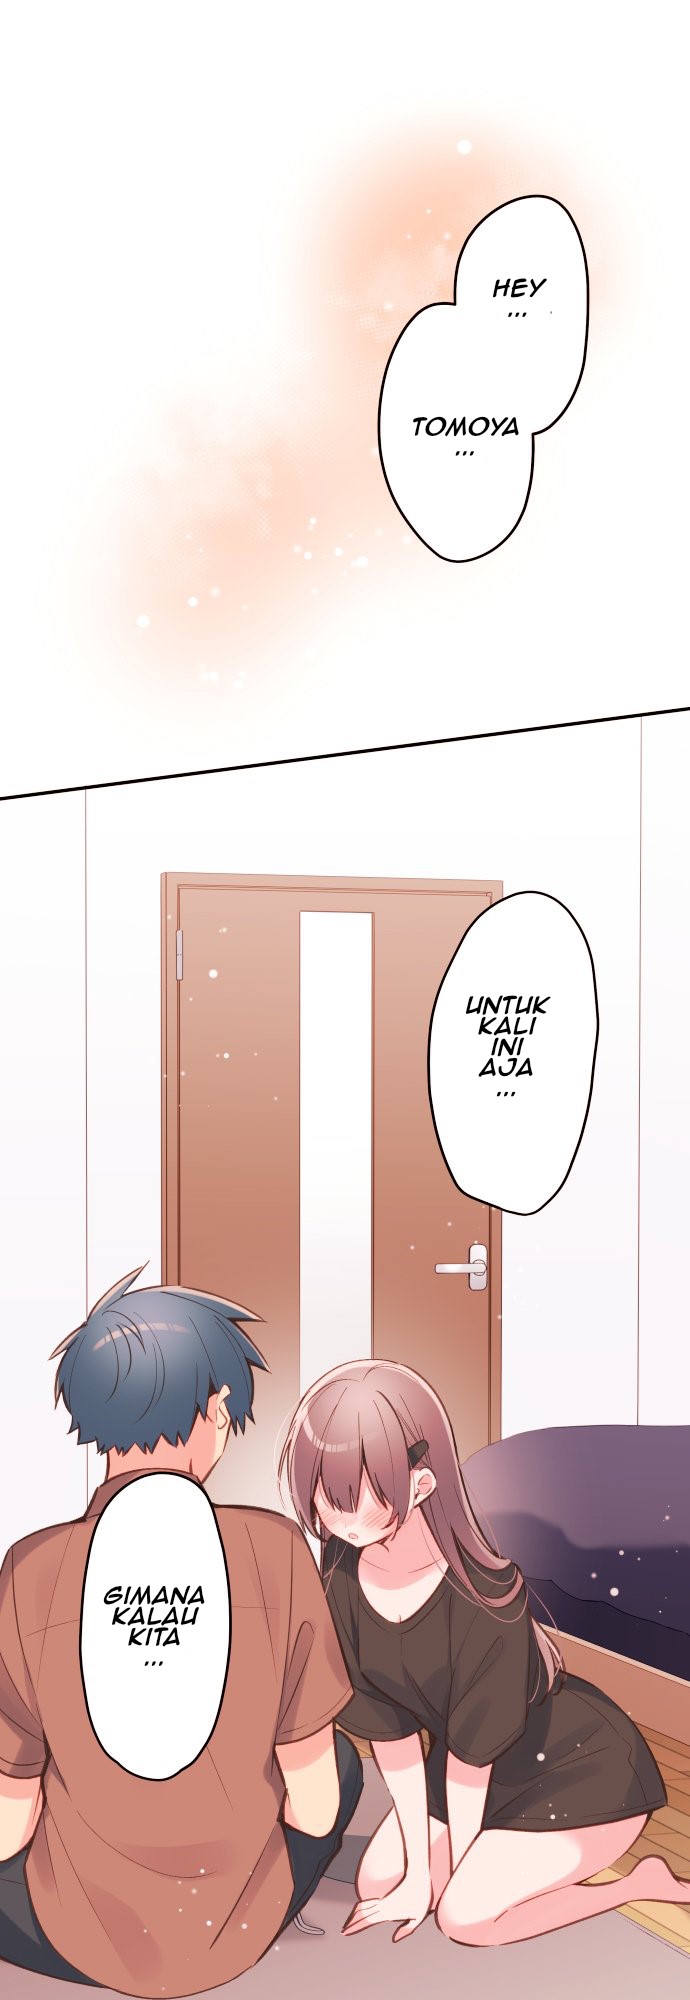 Waka-chan Is Flirty Again Chapter 37 2